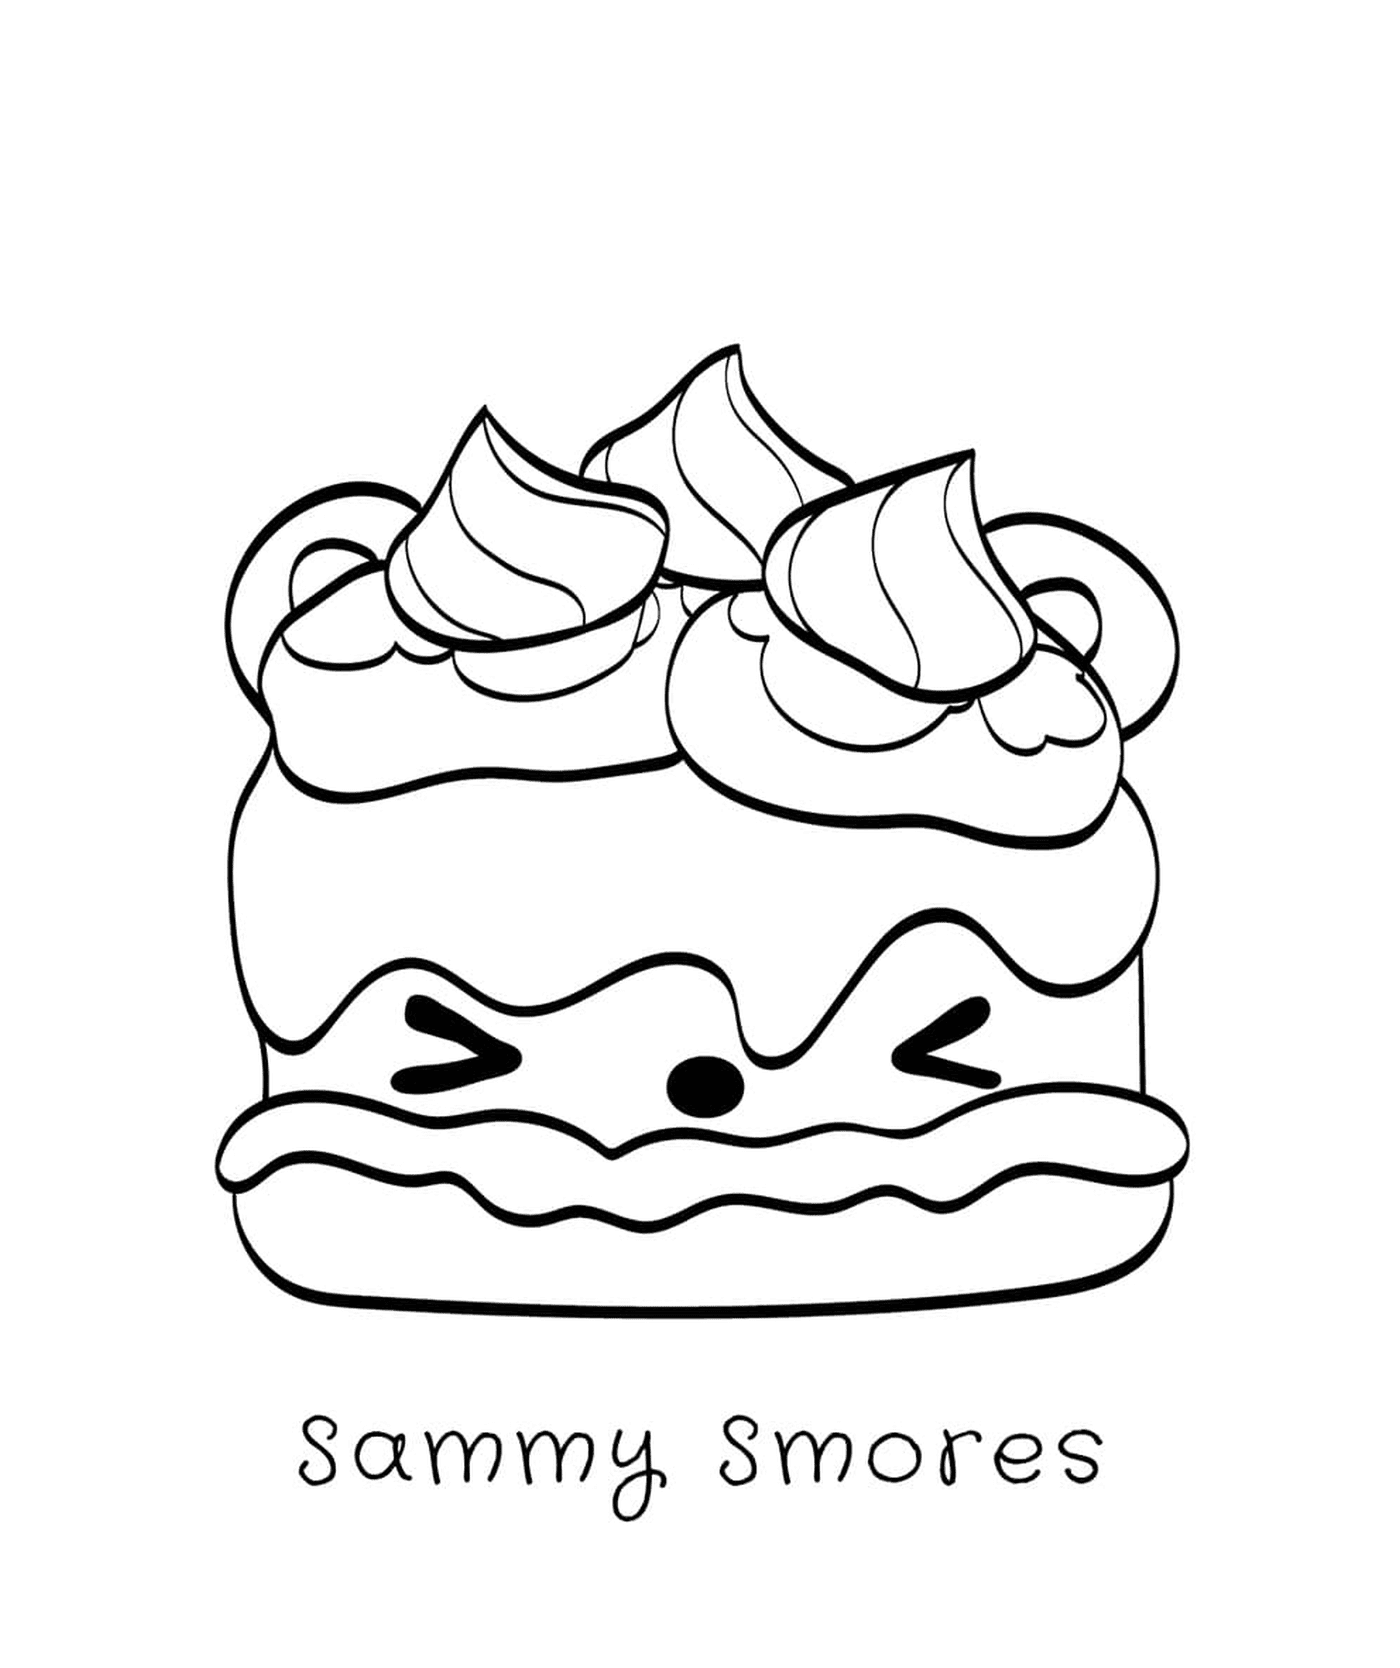  سامي سامي S'smos, a gourman 